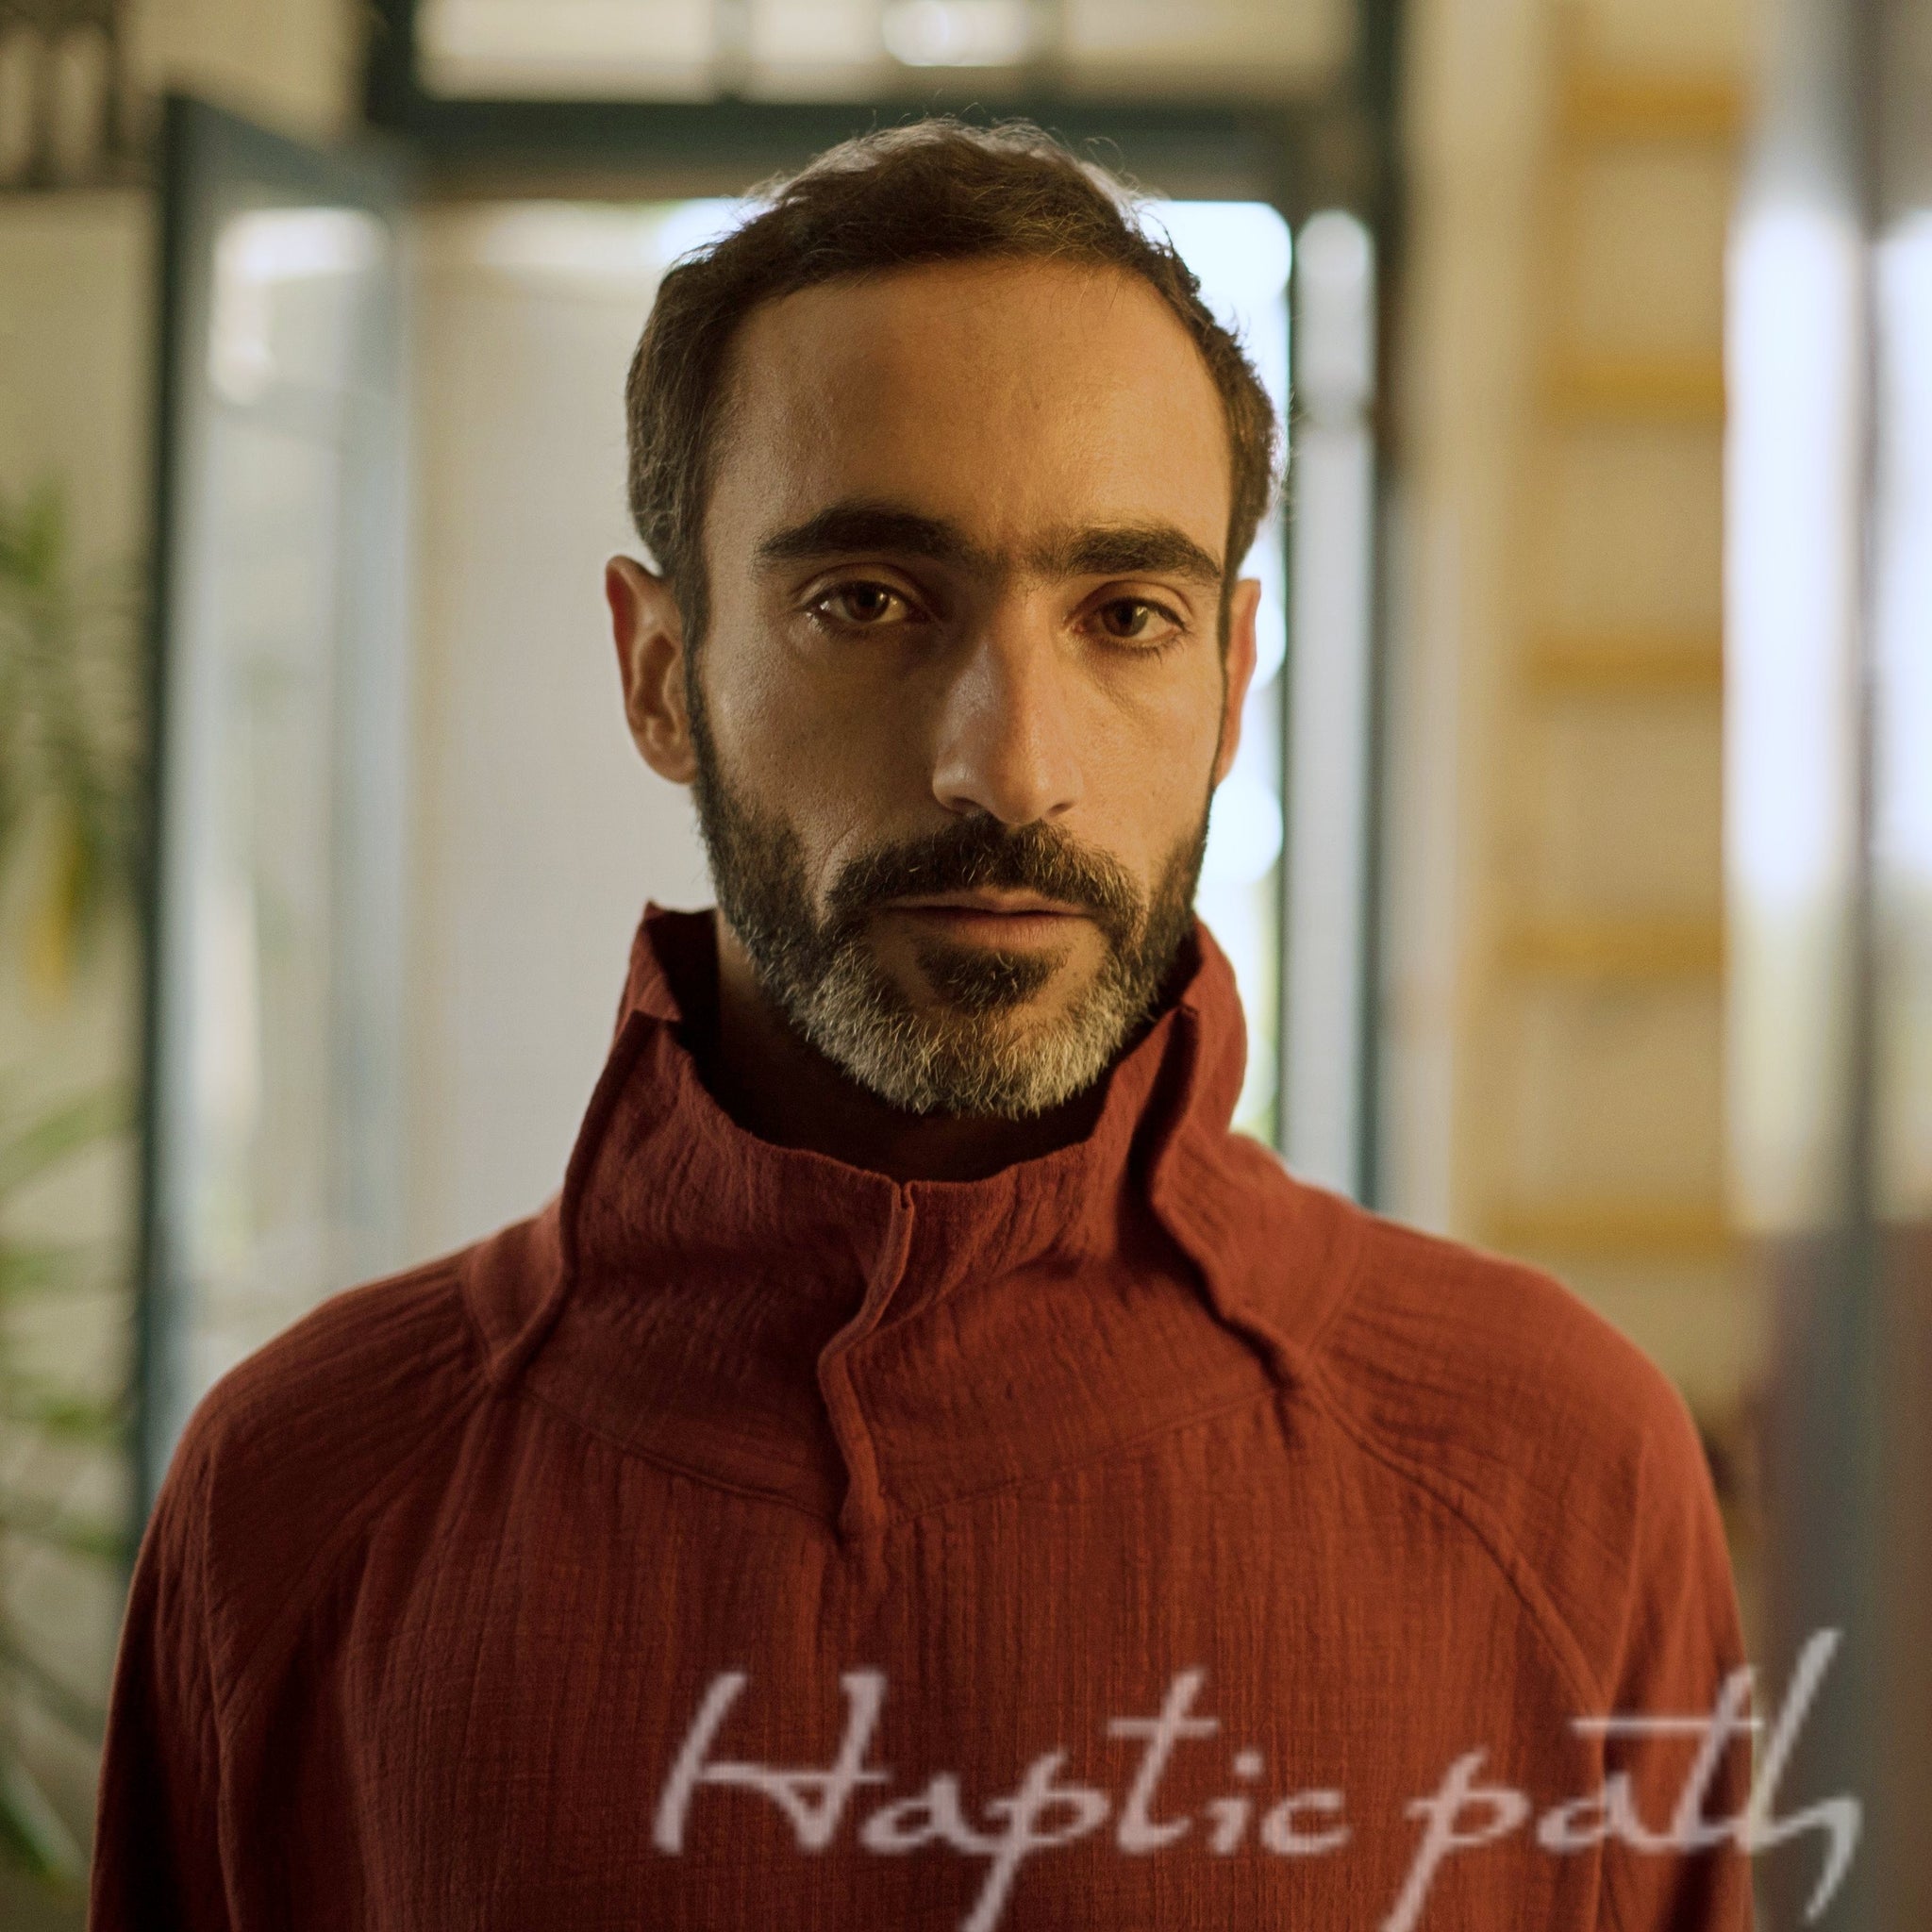 Comfortable designers unisex hemp jumper by Haptic path